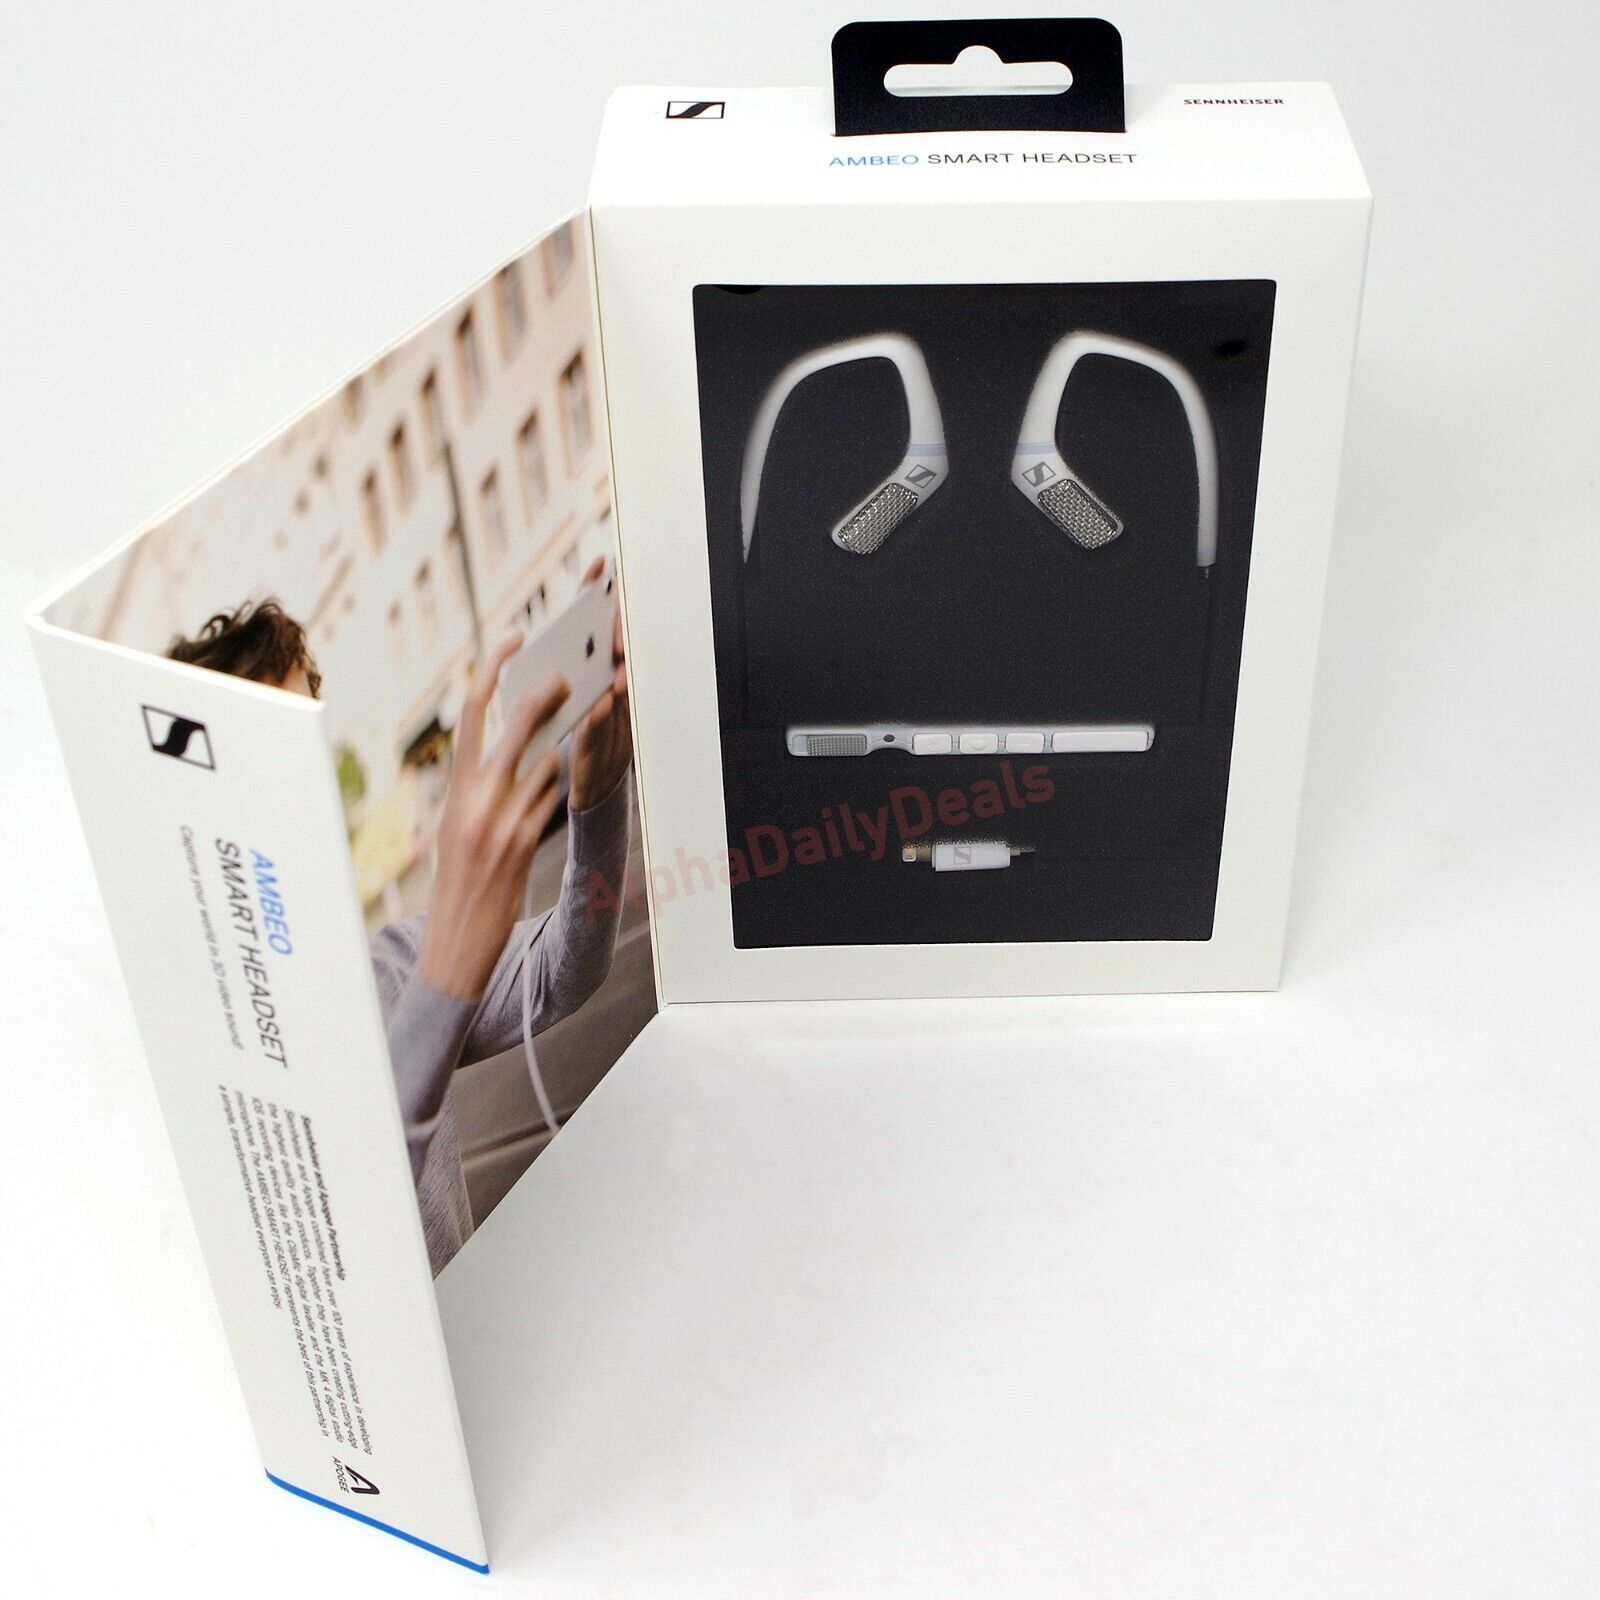 Sennheiser Ambeo Smart In-Ear Headset with Mic Lightning iOS iPhone iPad White